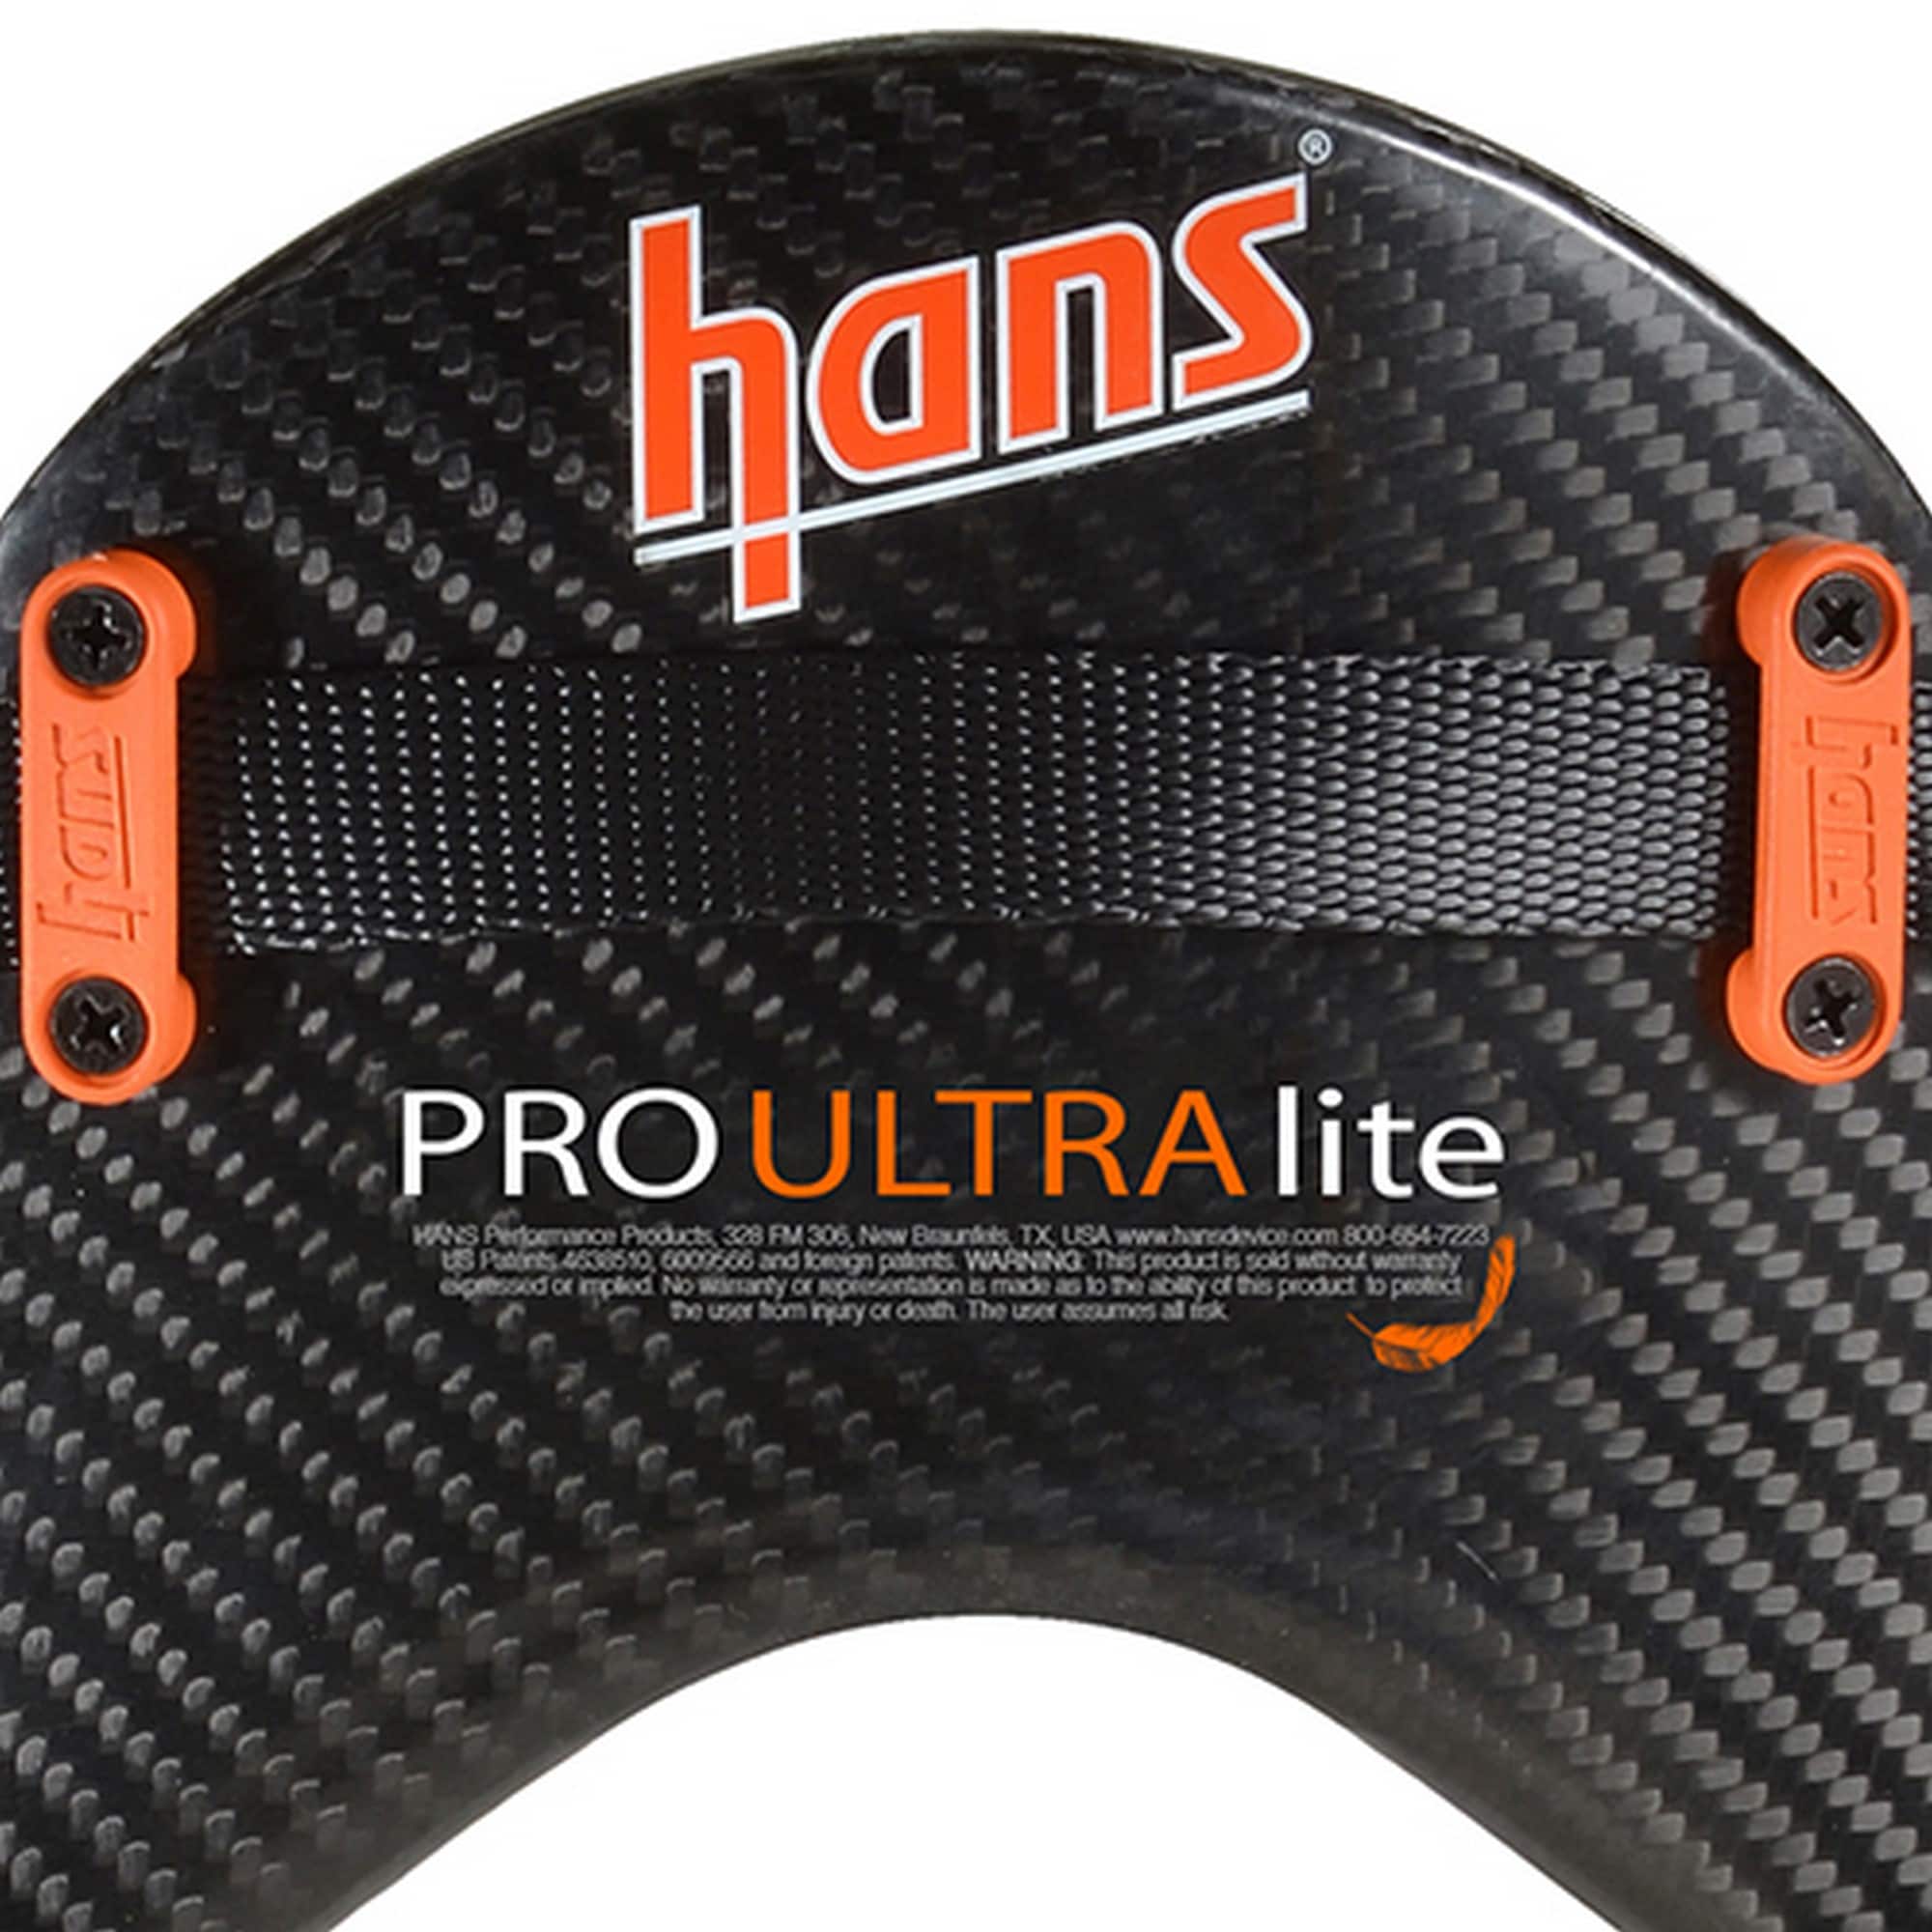 HANS Pro Ultra Lite 20° Large